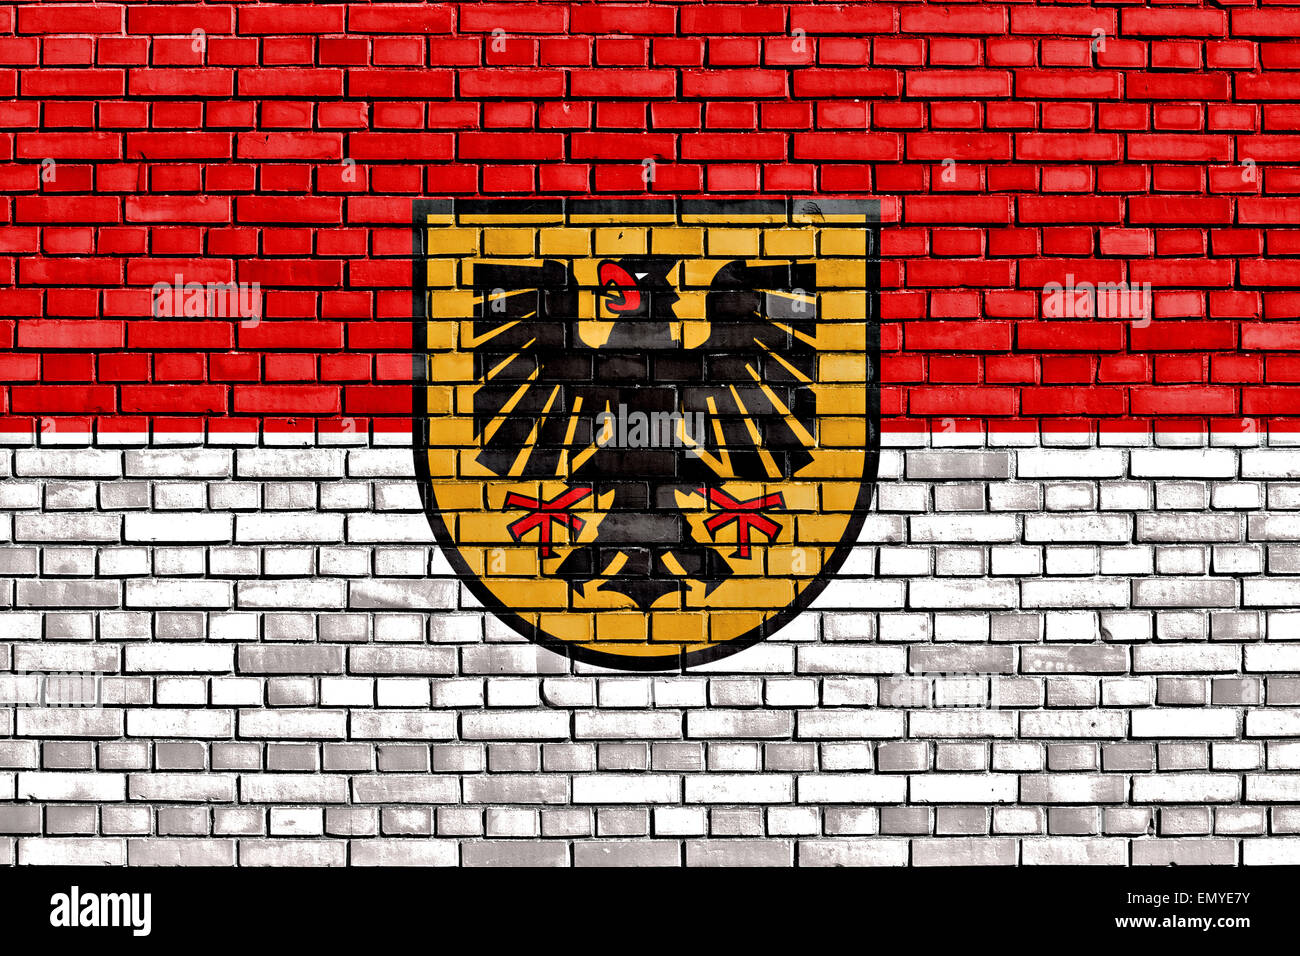 flag of Dortmund painted on brick wall Stock Photo